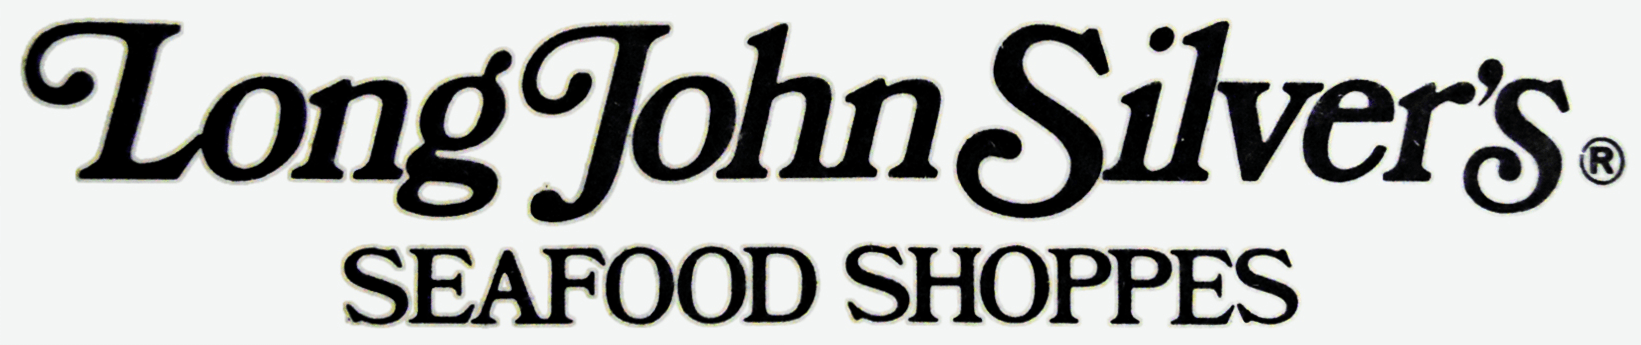 Silver's Logo - Long John Silver's | Logopedia | FANDOM powered by Wikia